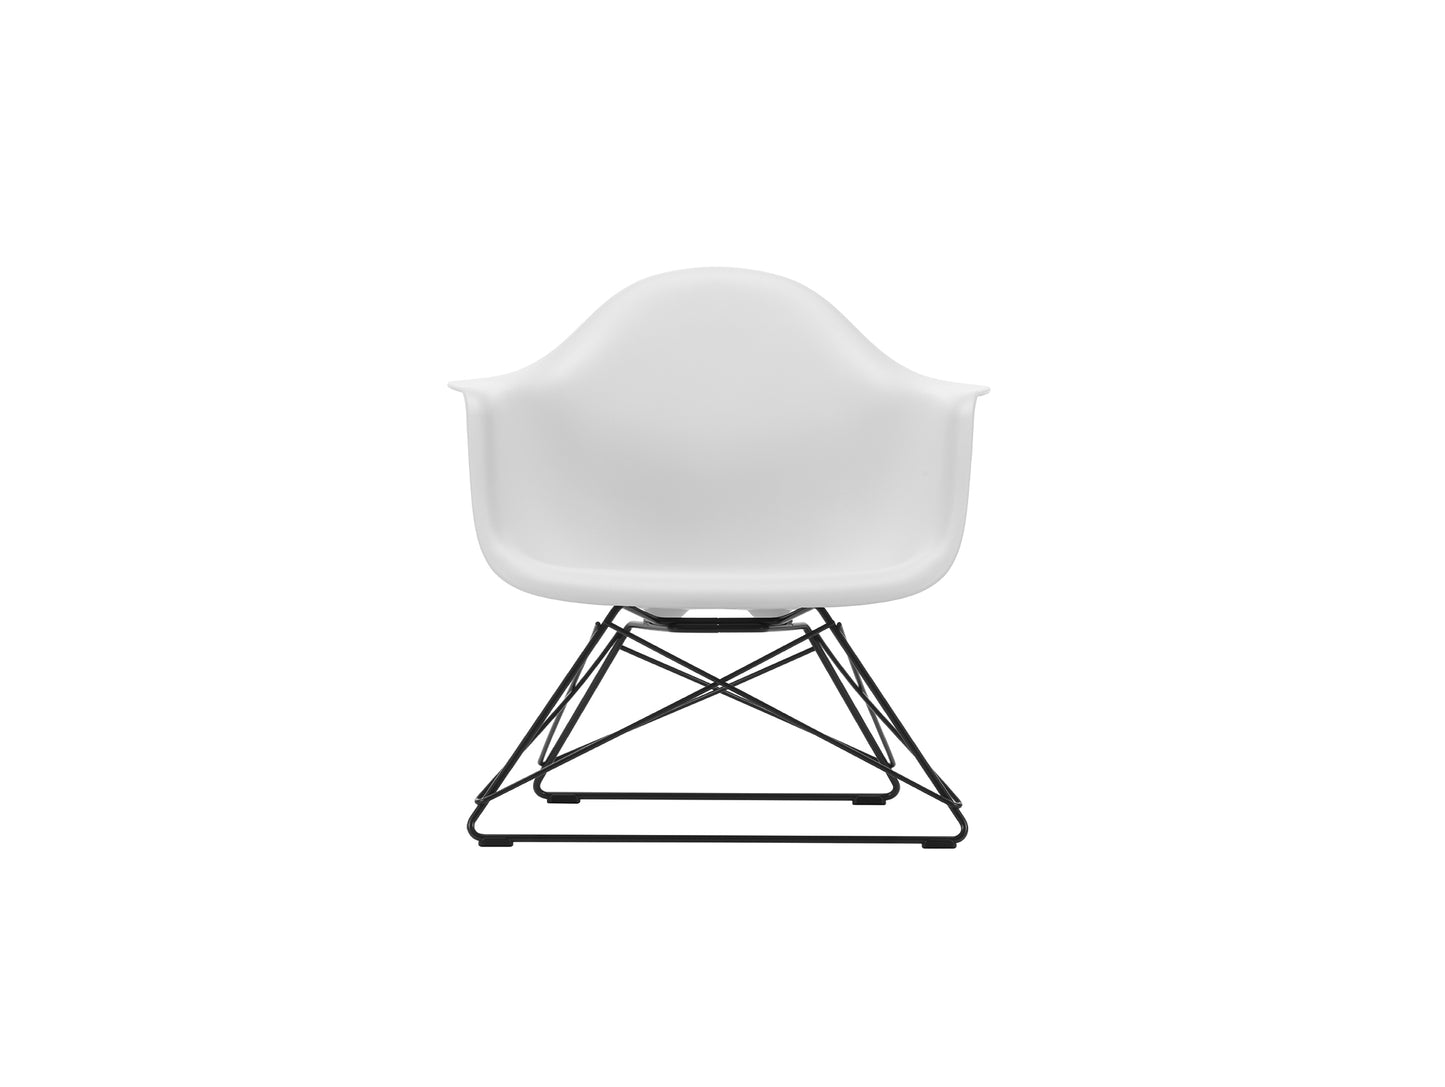 Eames Plastic Armchair LAR by Vitra - 85 Cotton White Shell / Basic Dark Base